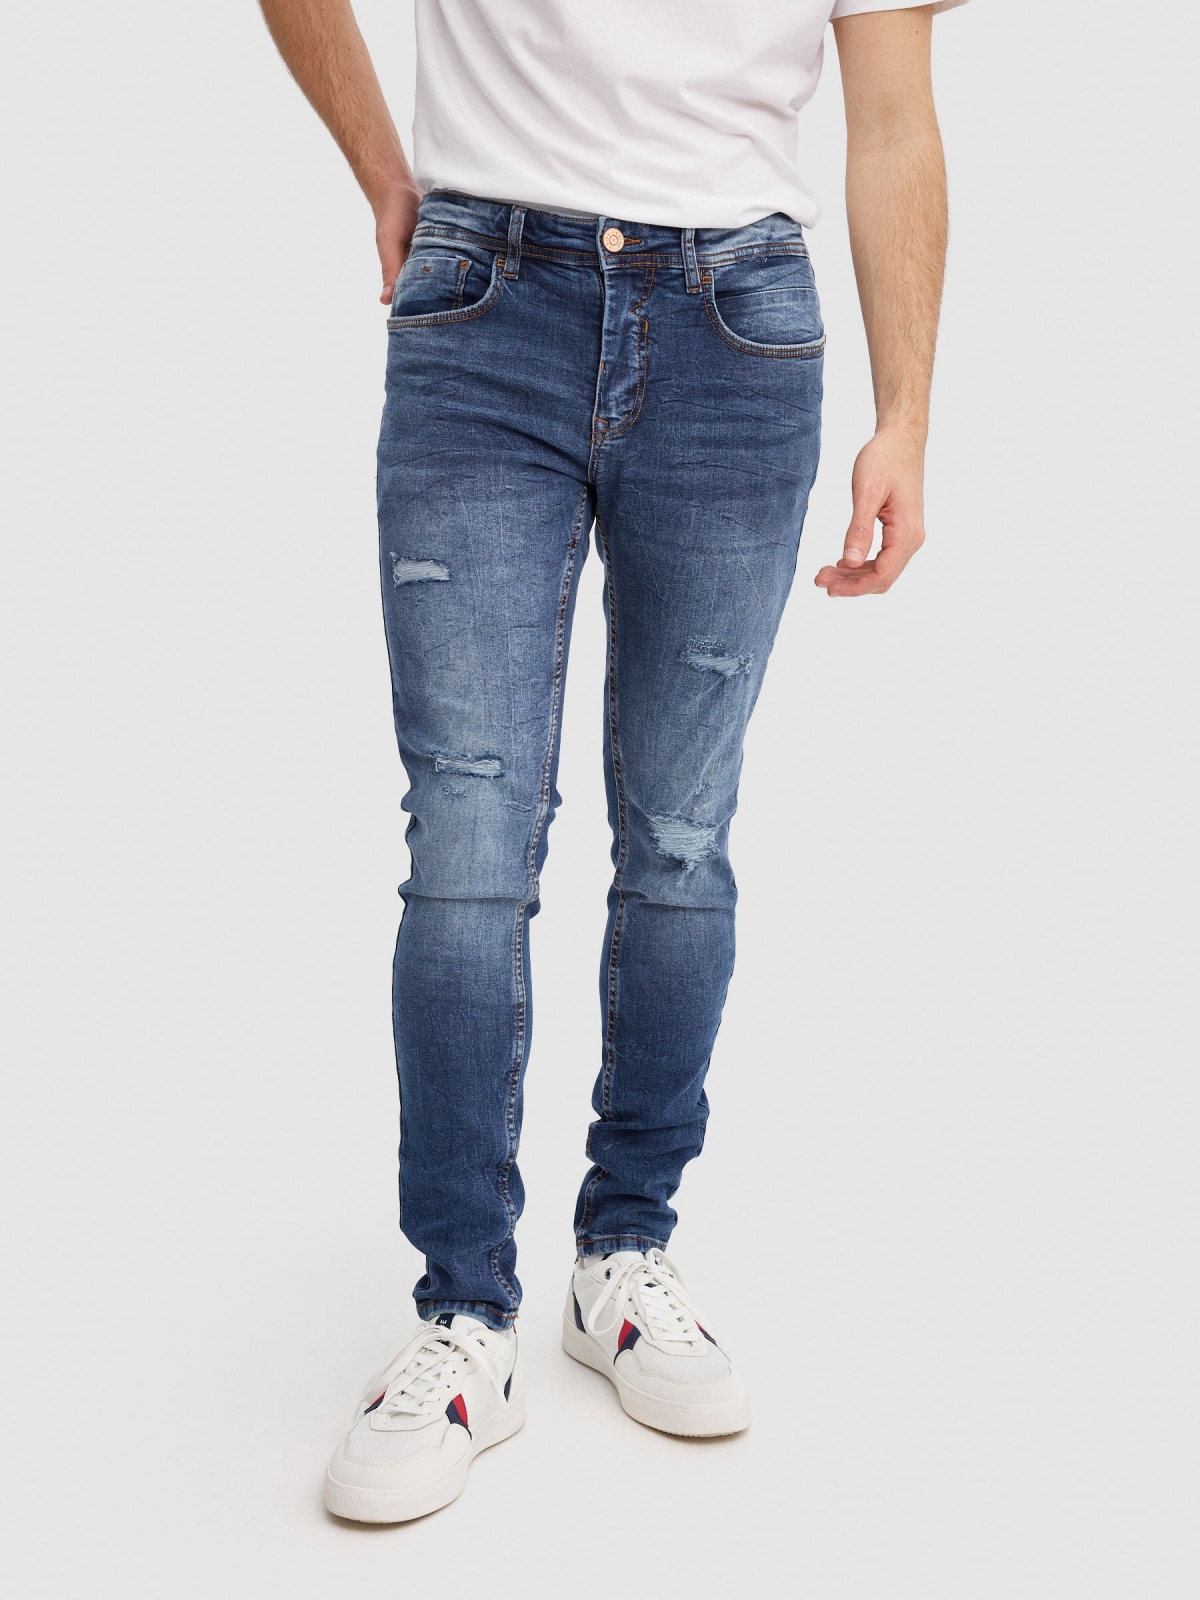 Jeans super slim blue middle front view